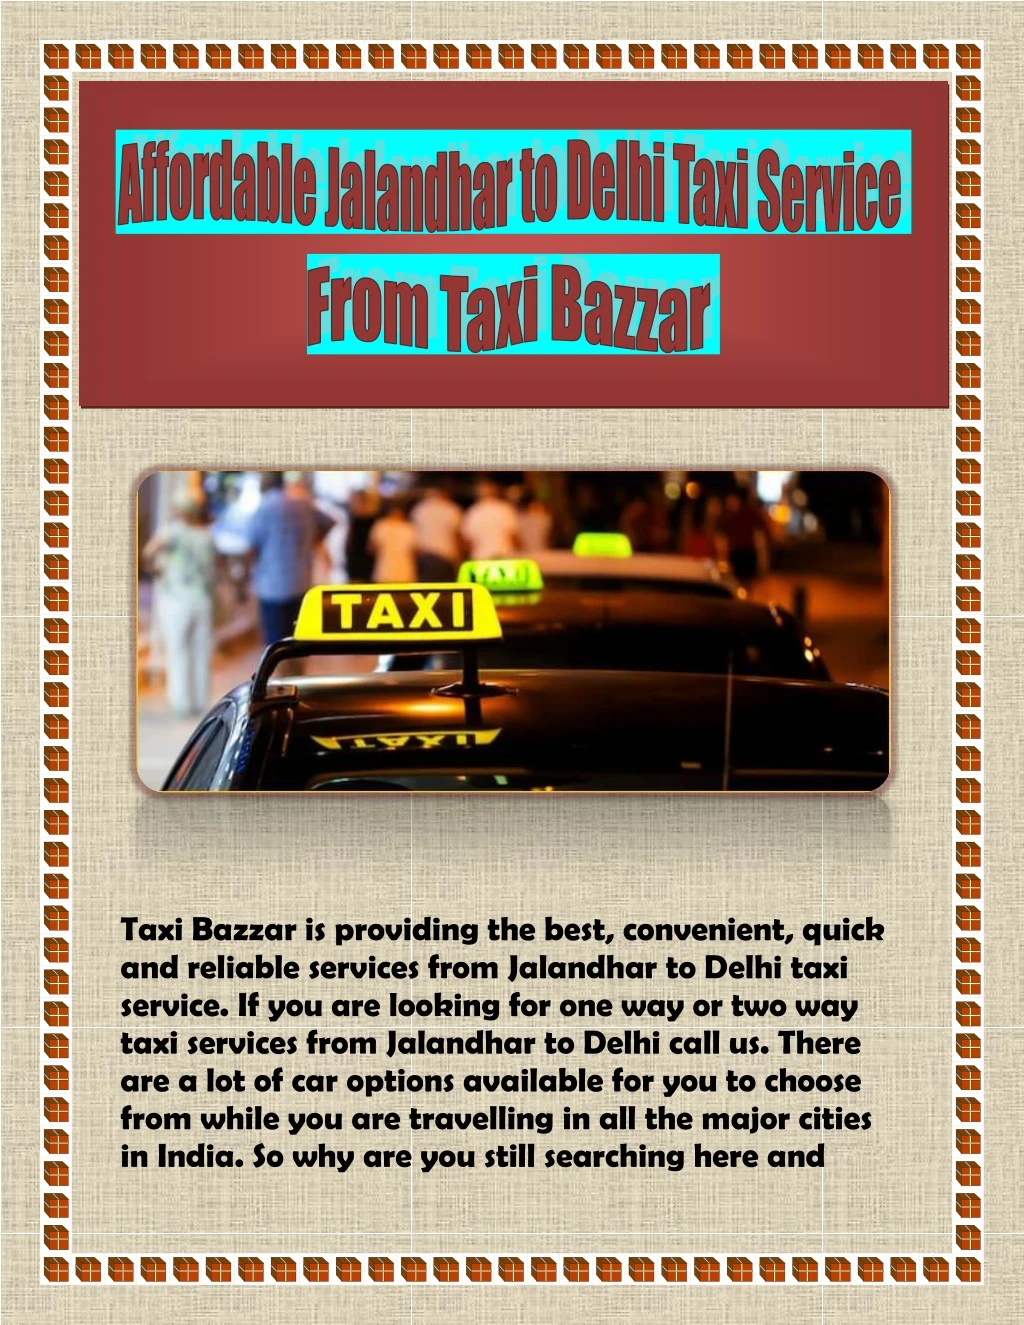 taxi bazzar is providing the best convenient